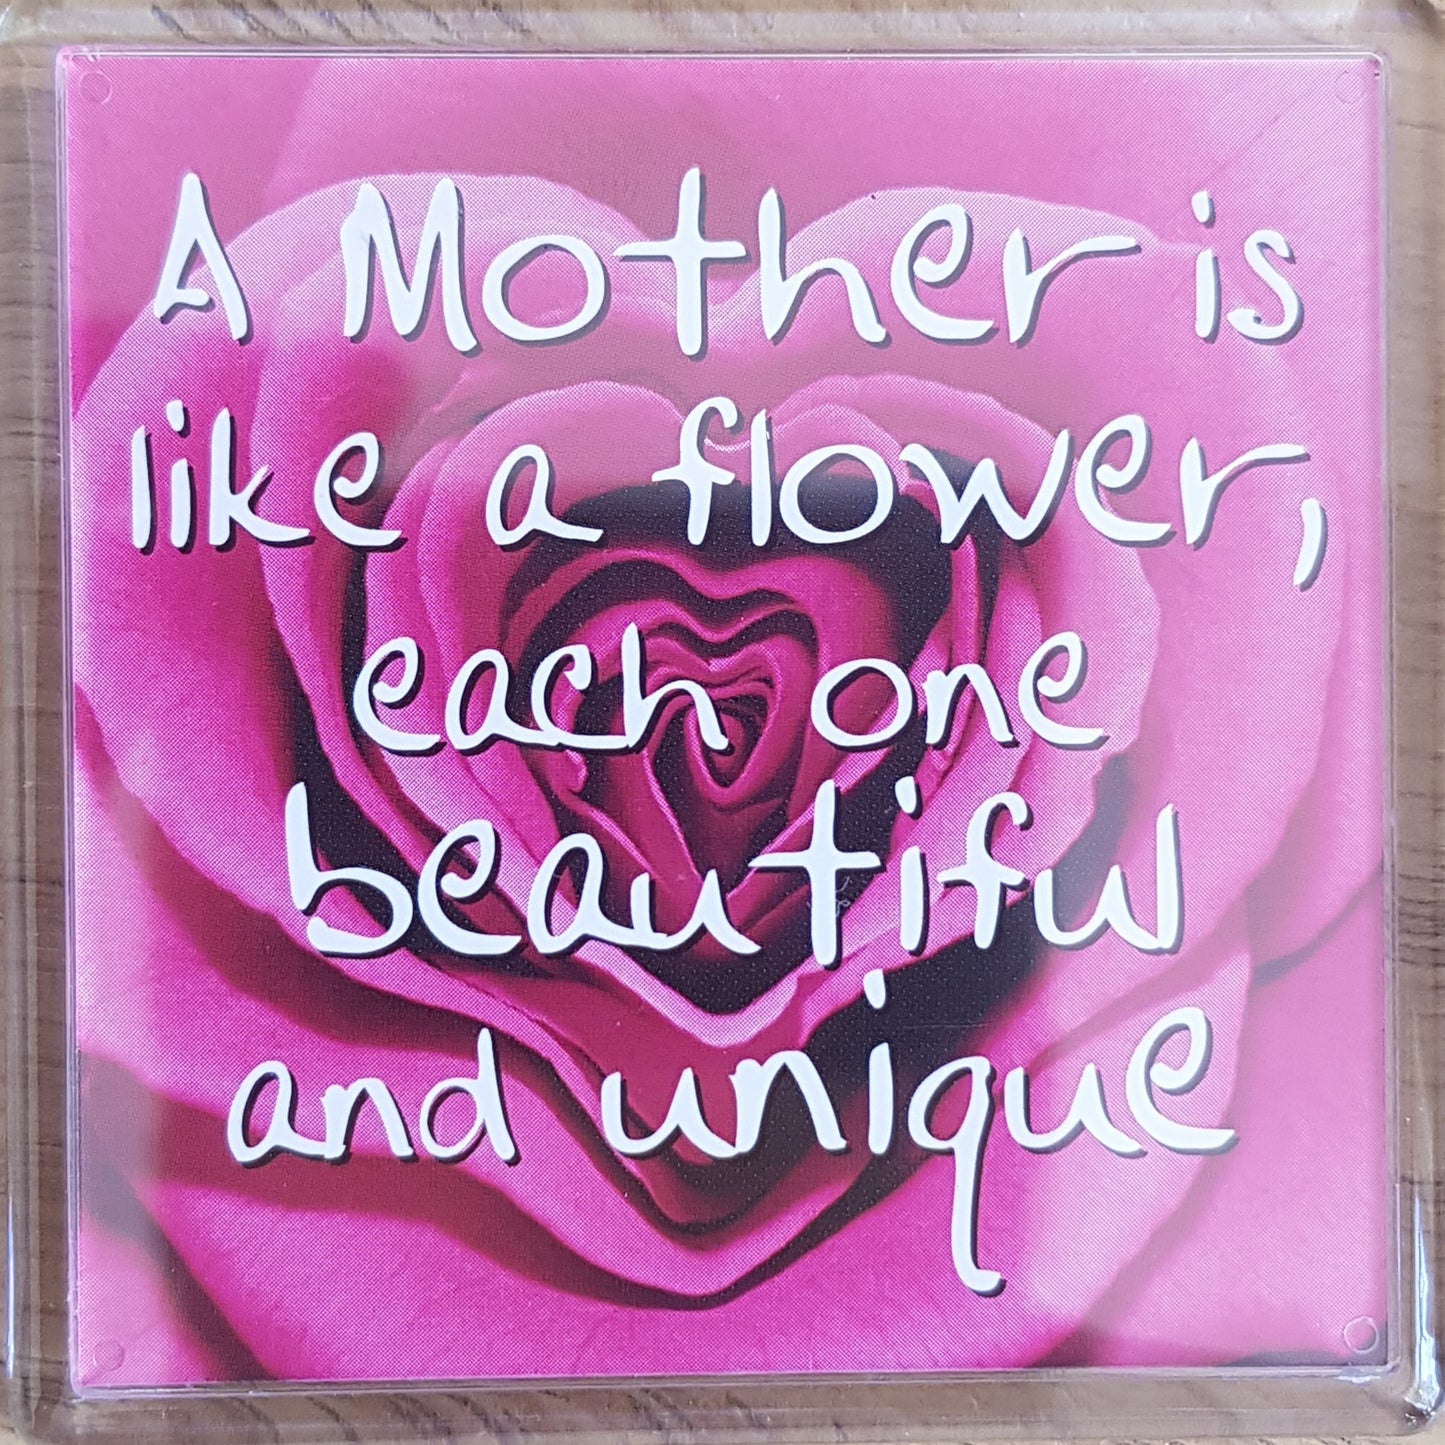 History & Heraldry Sentiment Fridge Magnet - A Mother is like a flower